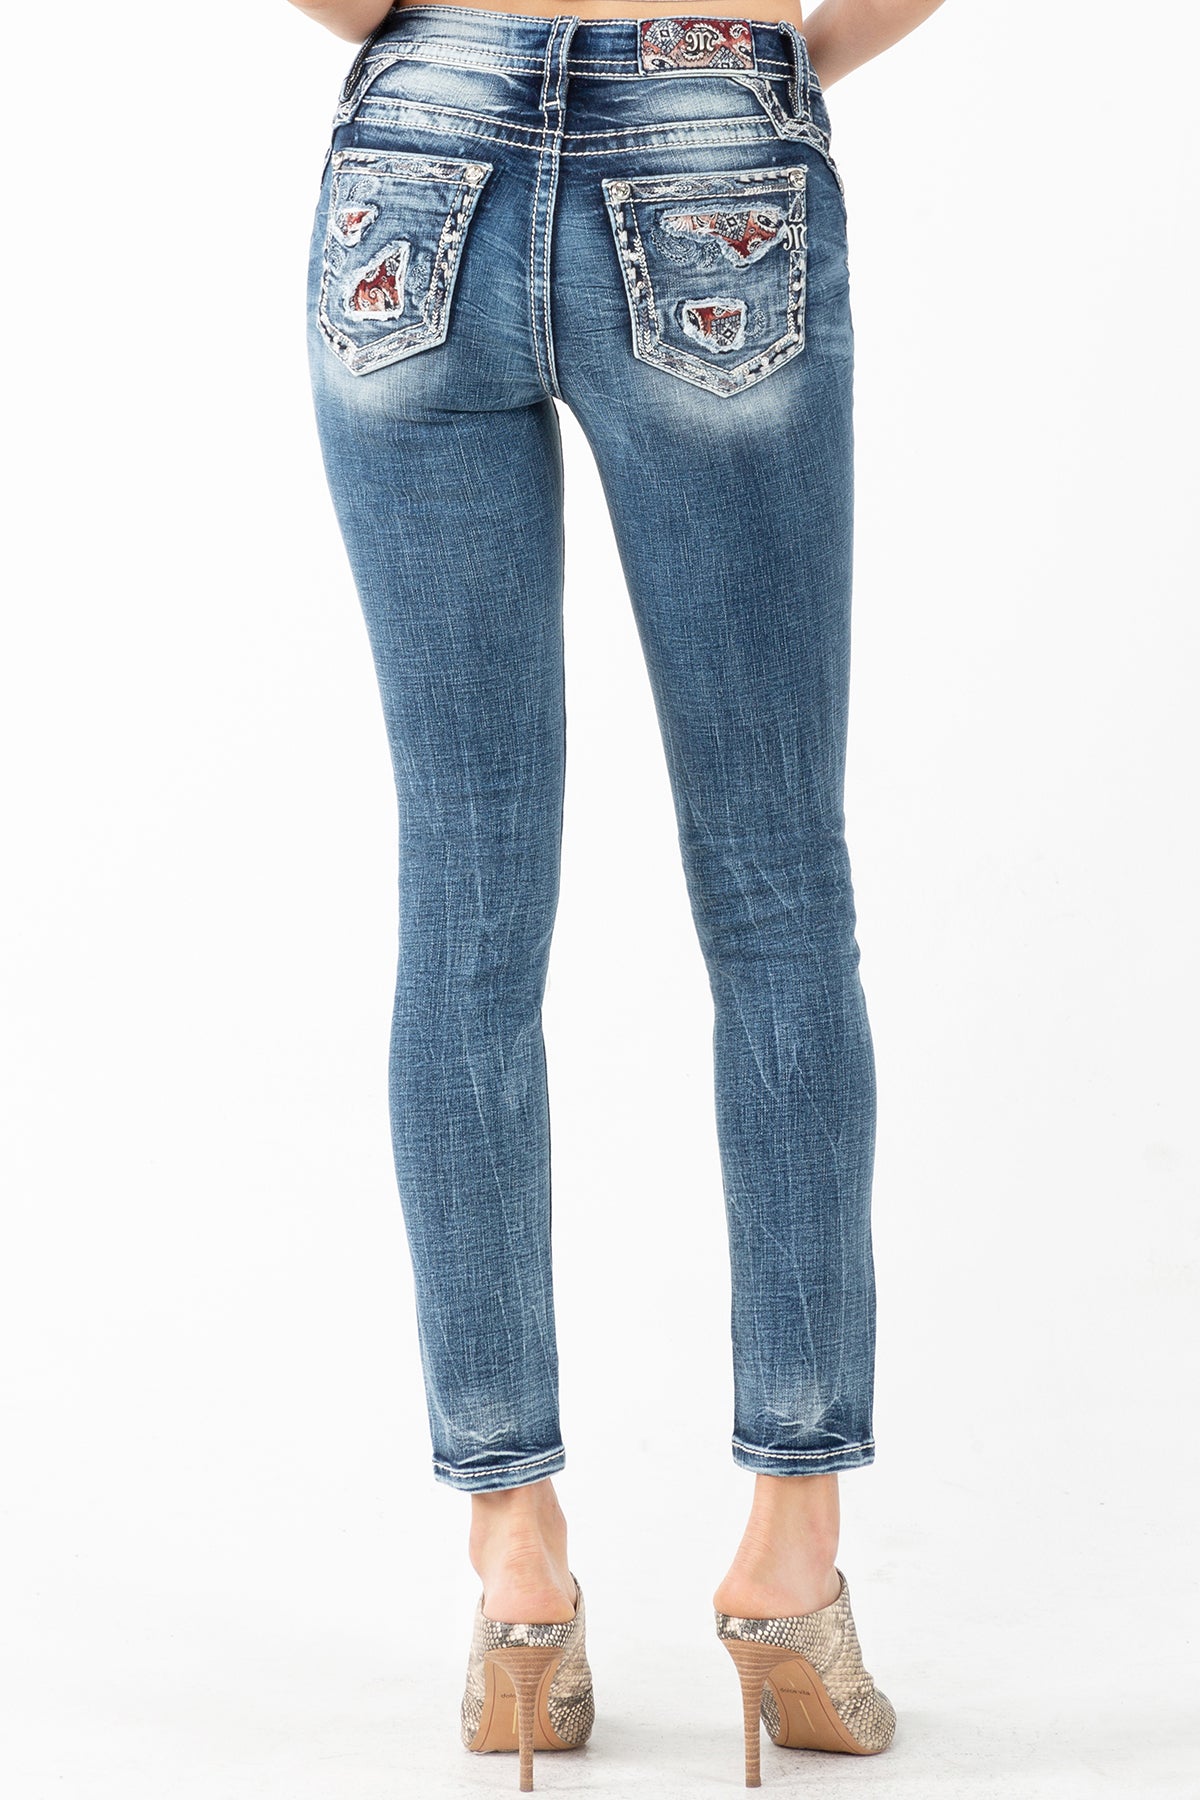 K1234 Mid-Rise Jeans